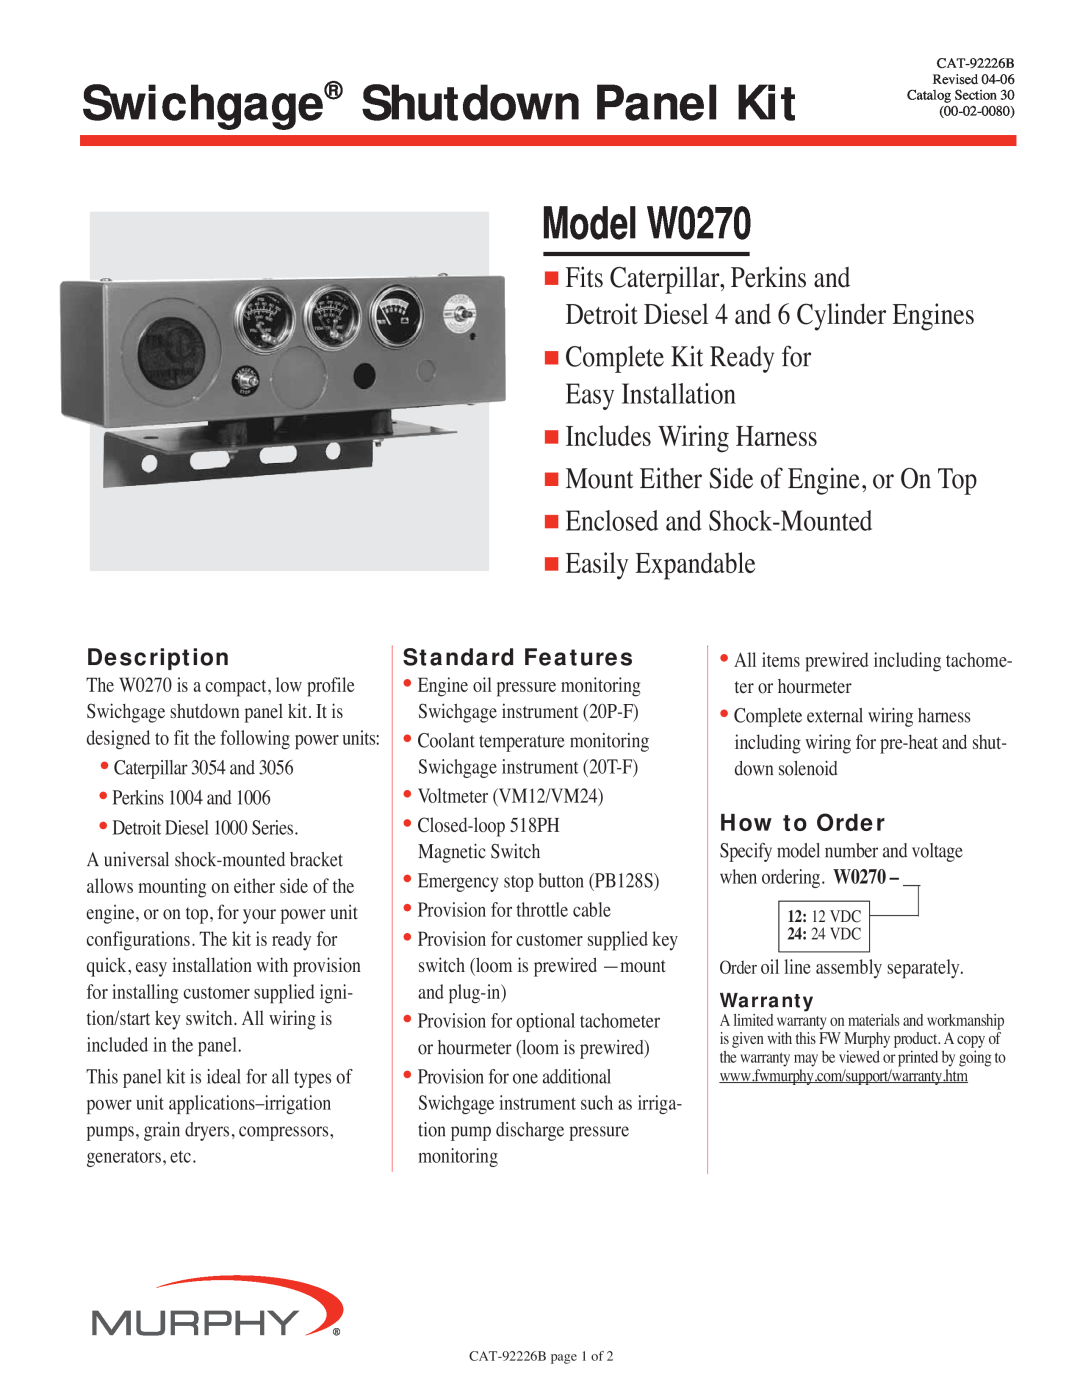 Murphy warranty CAT-92226B Revised Catalog -02-0080, Swichgage Shutdown Panel Kit, Model W0270, Easily Expandable 